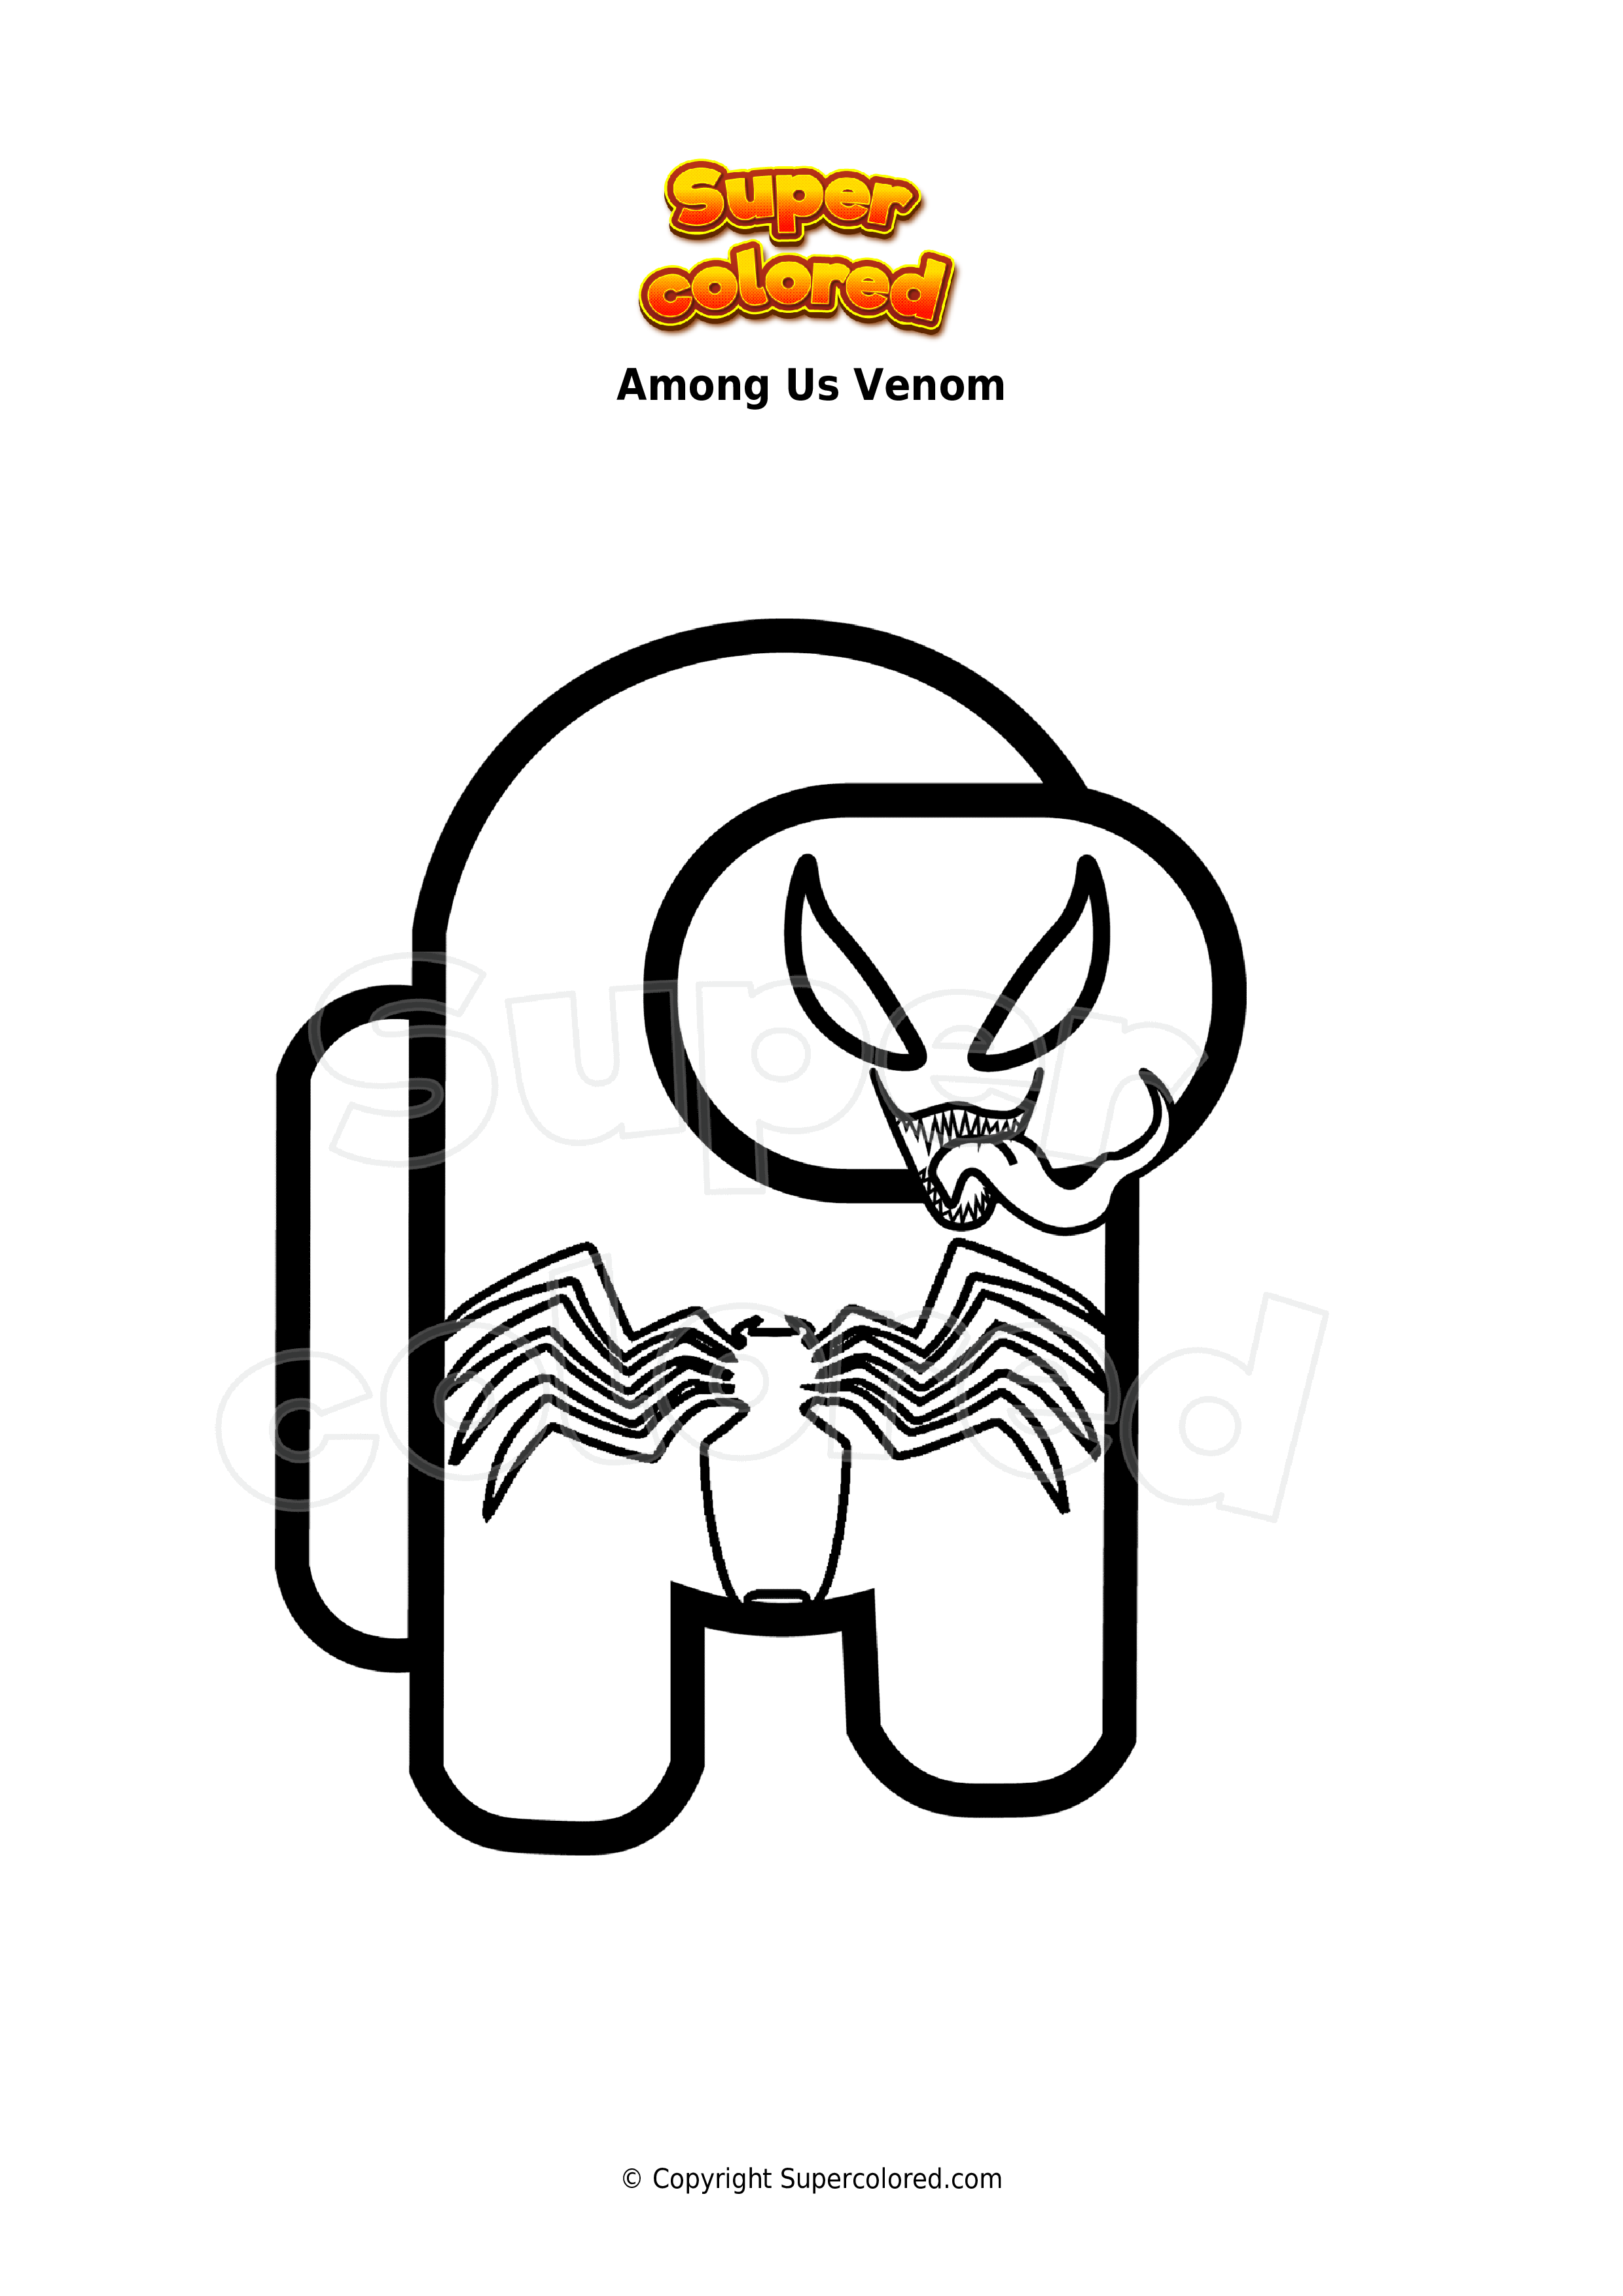 Coloring page Among Us Venom   Supercolored.com